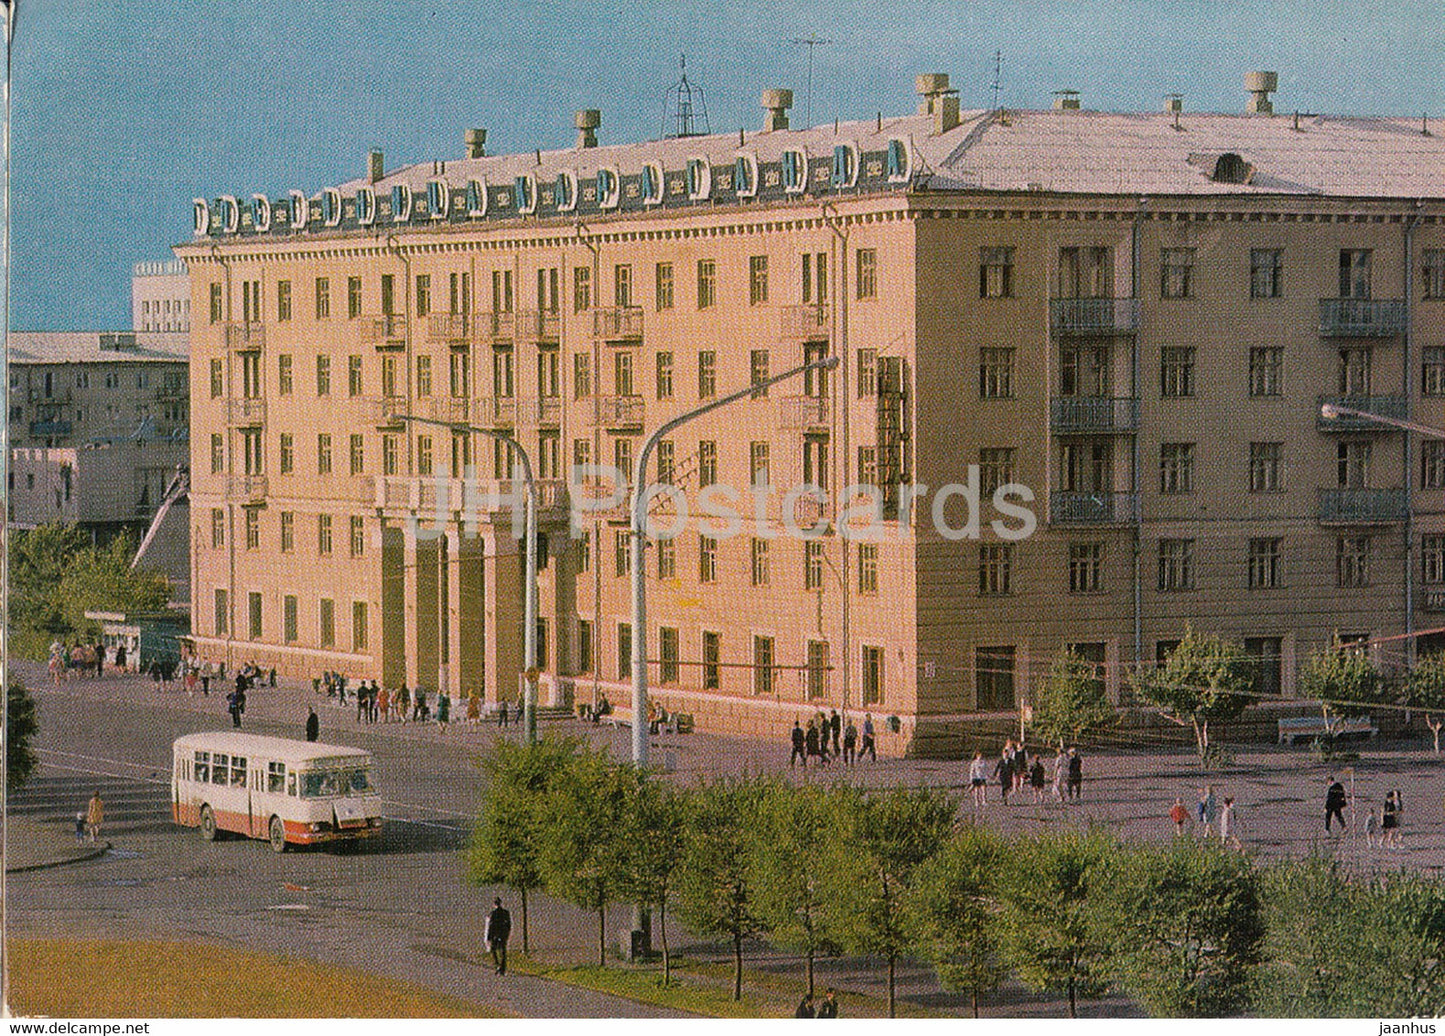 Karaganda - Karagandy - hotel - bus - postal stationery - 1976 - Kazakhstan USSR - unused - JH Postcards